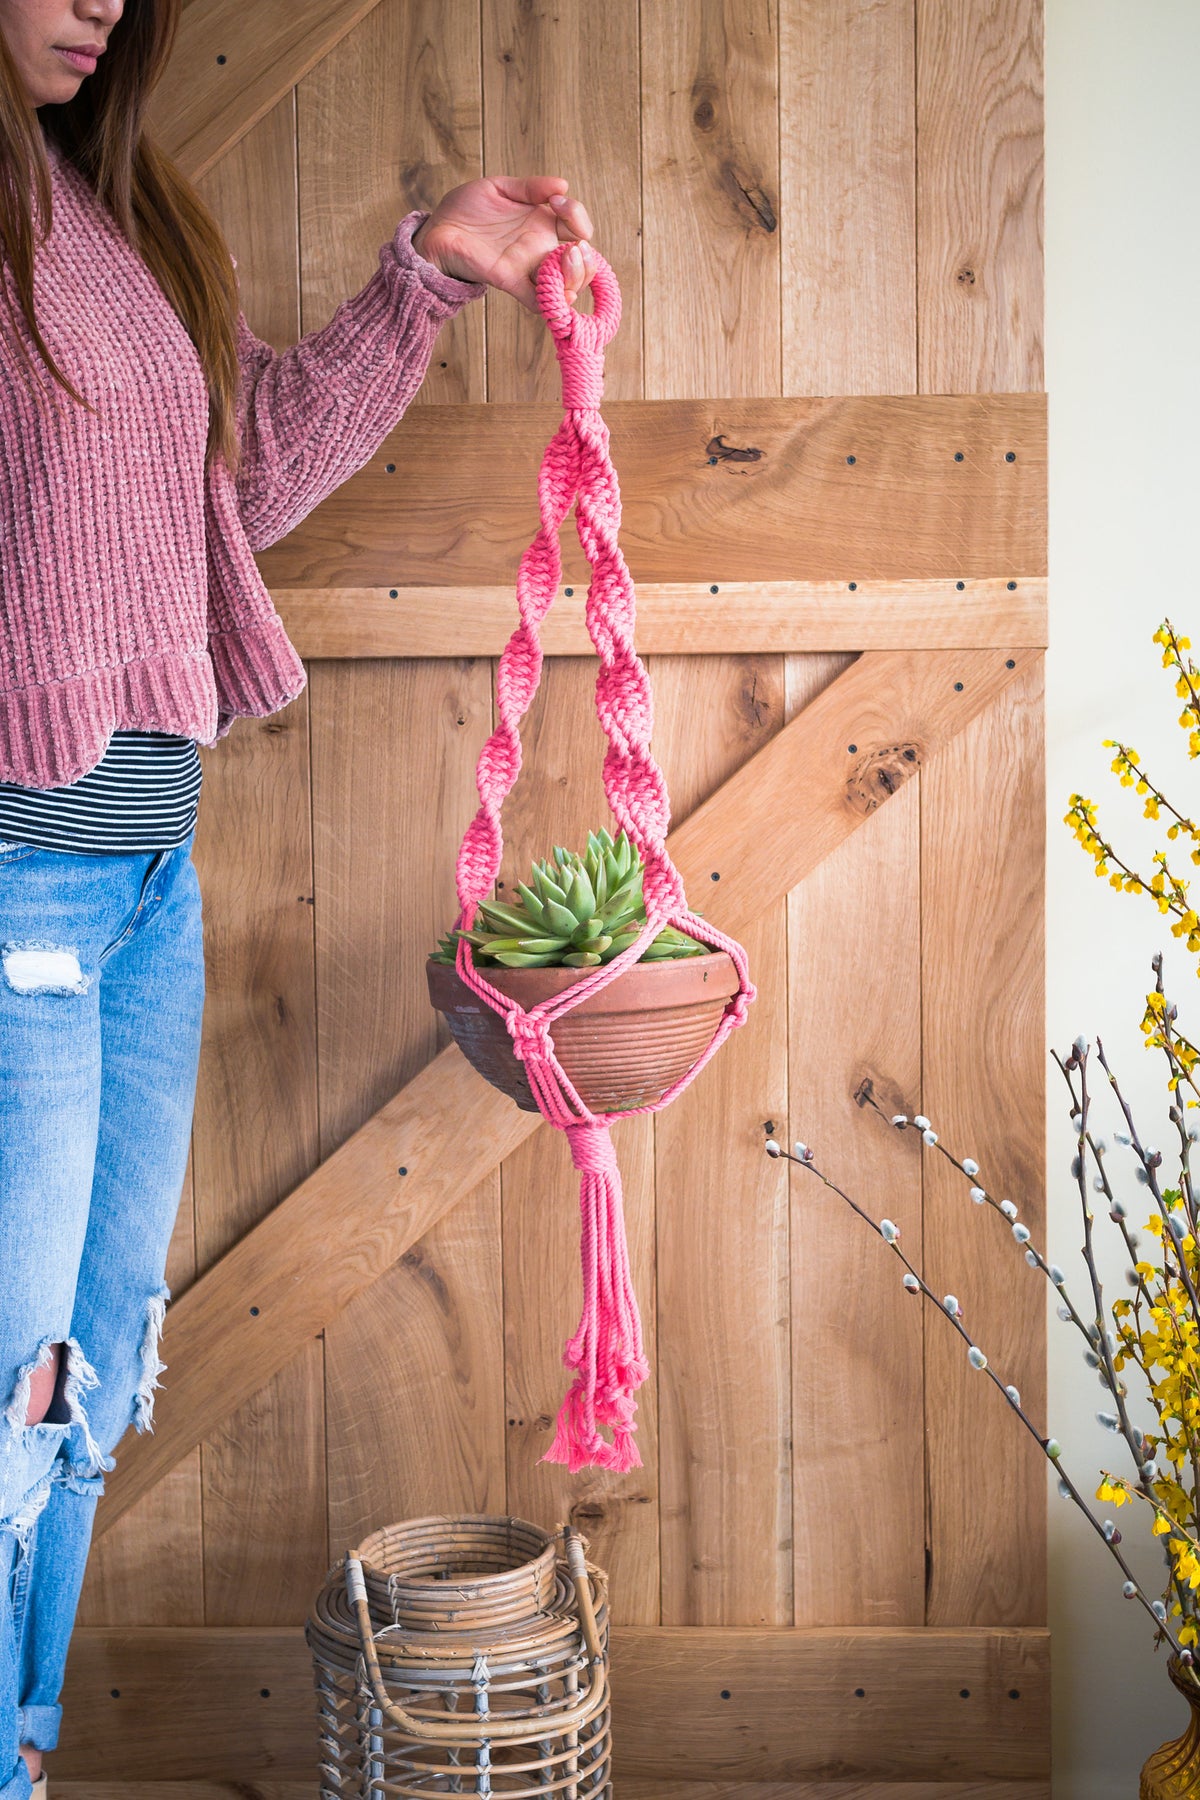 Macrame plant hanger / hanging planter / Succulent planter / Plant holder / Plant hanger / Modern macrame / Gift for her / Housewarming gift